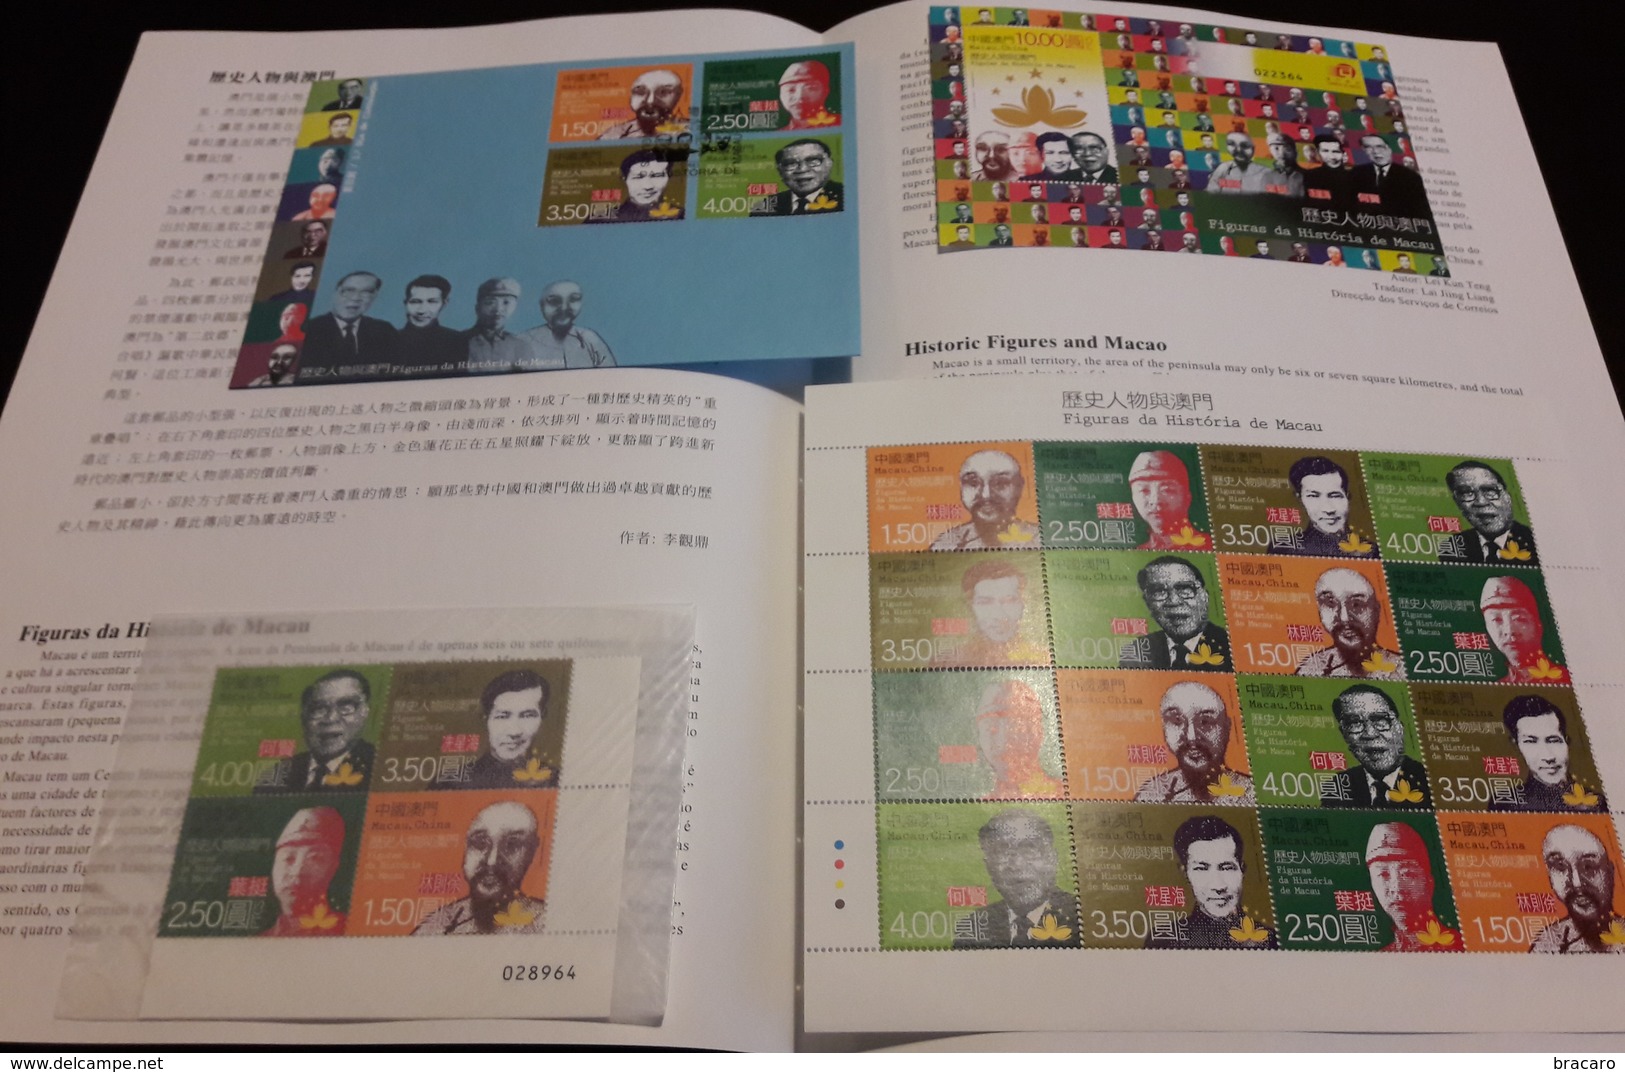 MACAU / MACAO (CHINA) - Historic Figures 2011 - Stamps (1/4 Sheet) MNH + Block MNH + Miniature Sheet MNH + FDC + Leaflet - Lots & Serien